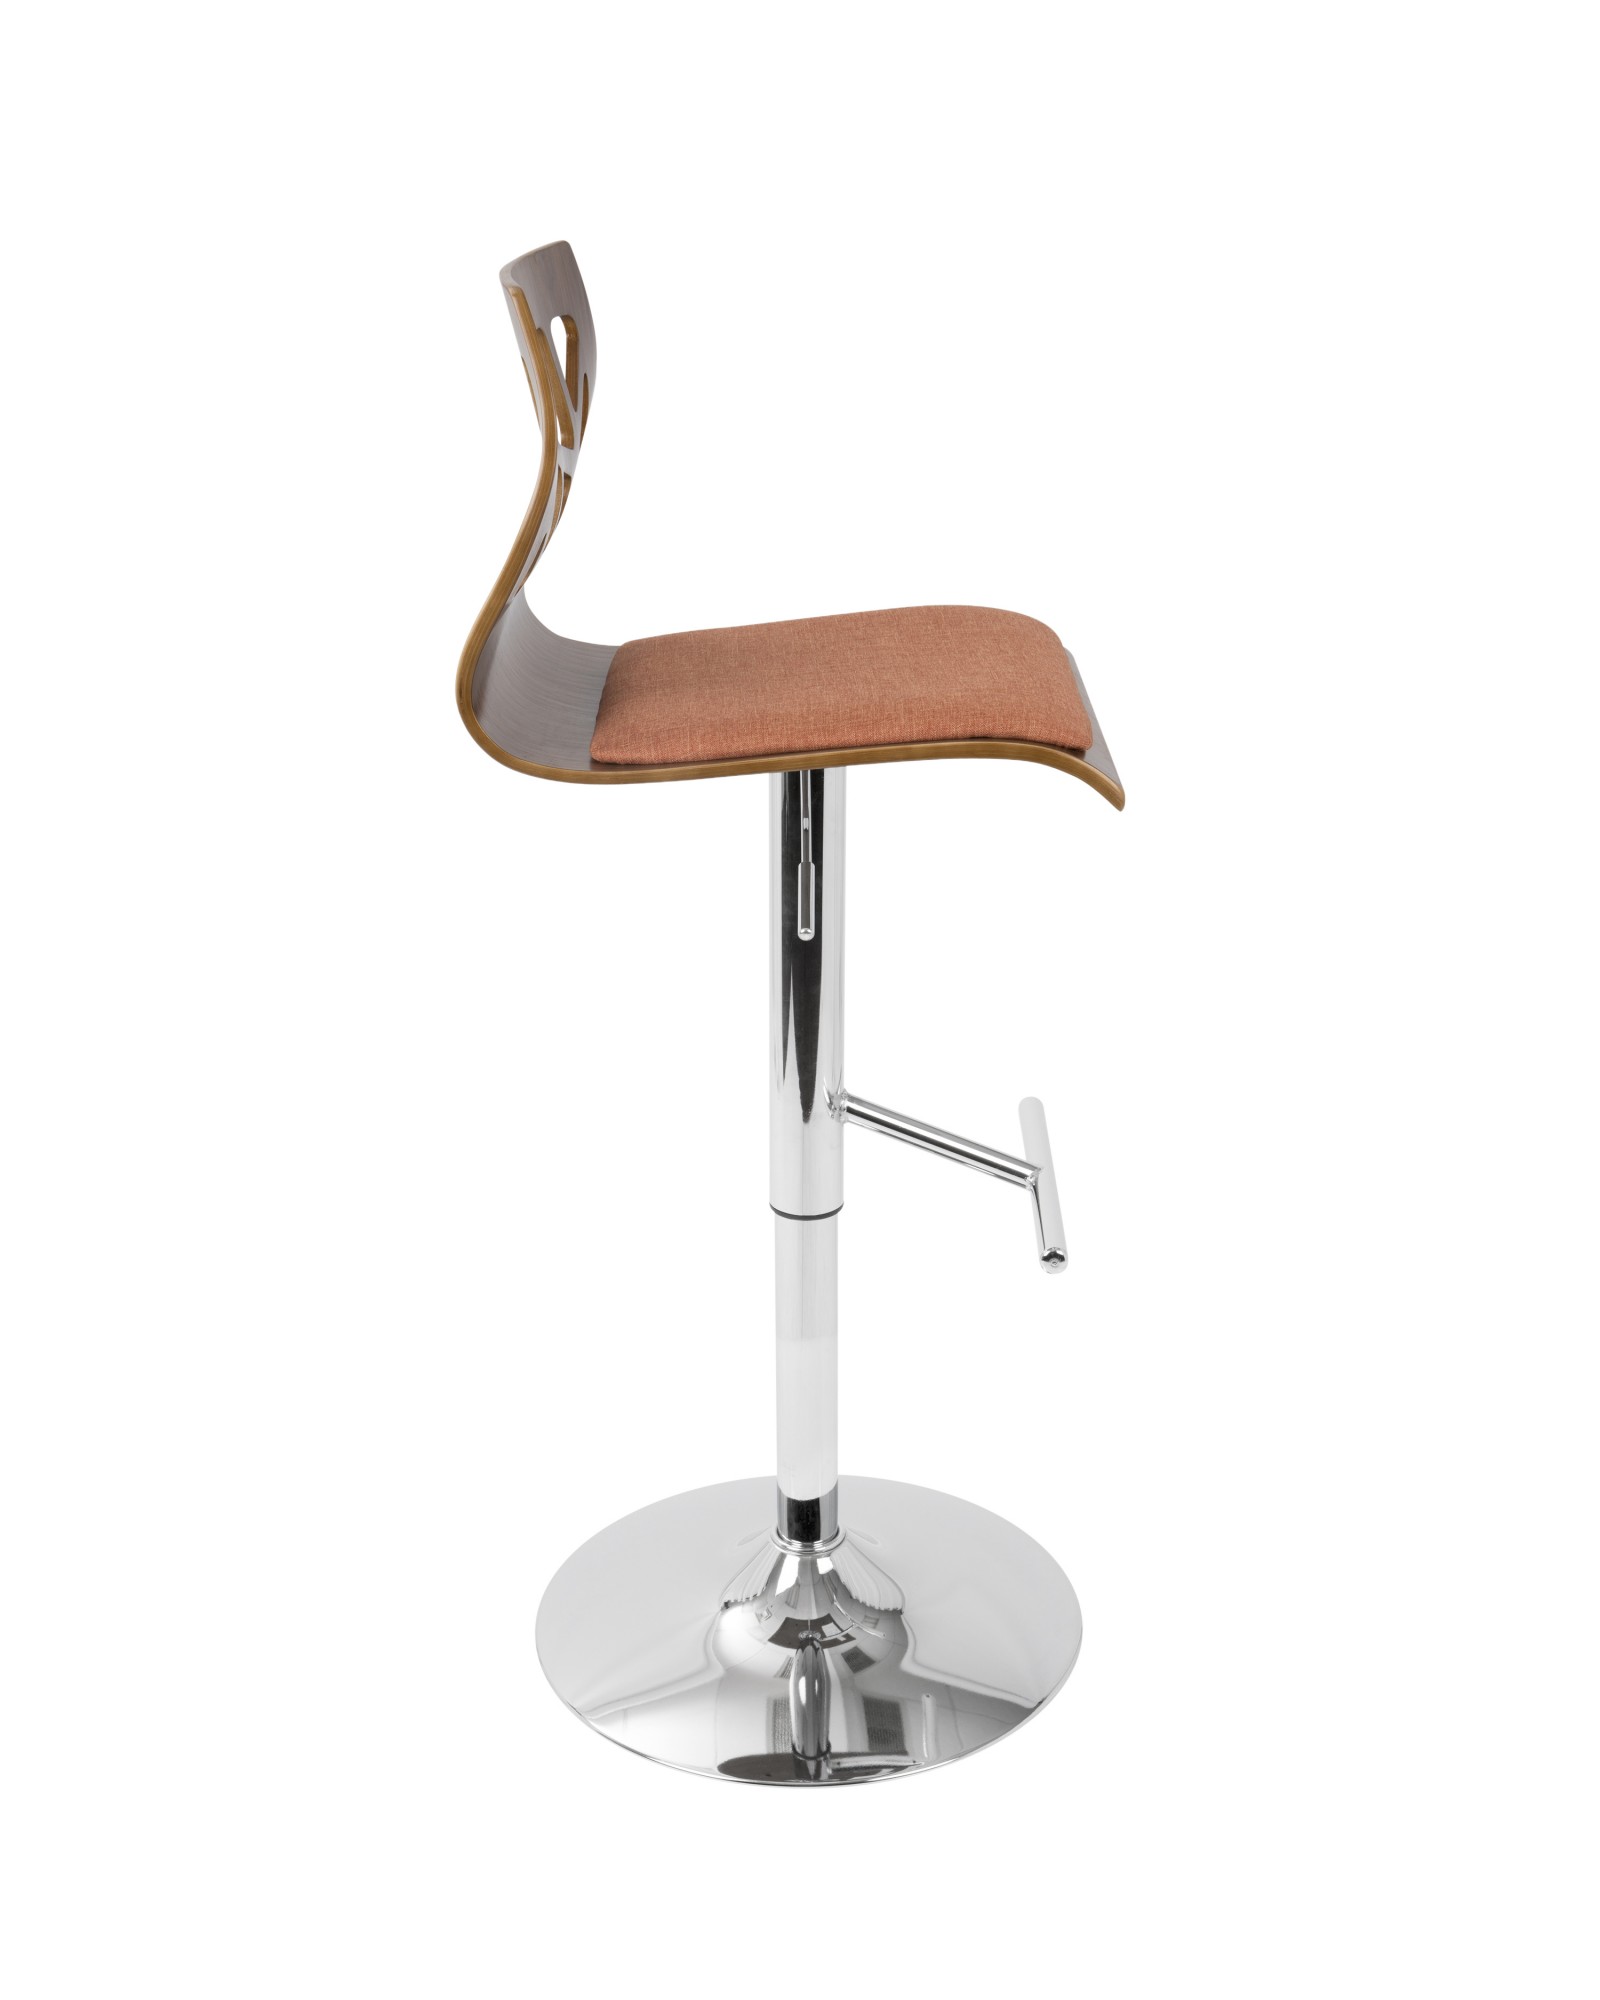 Folia Mid-Century Modern Adjustable Barstool with Swivel in Walnut And Orange Fabric